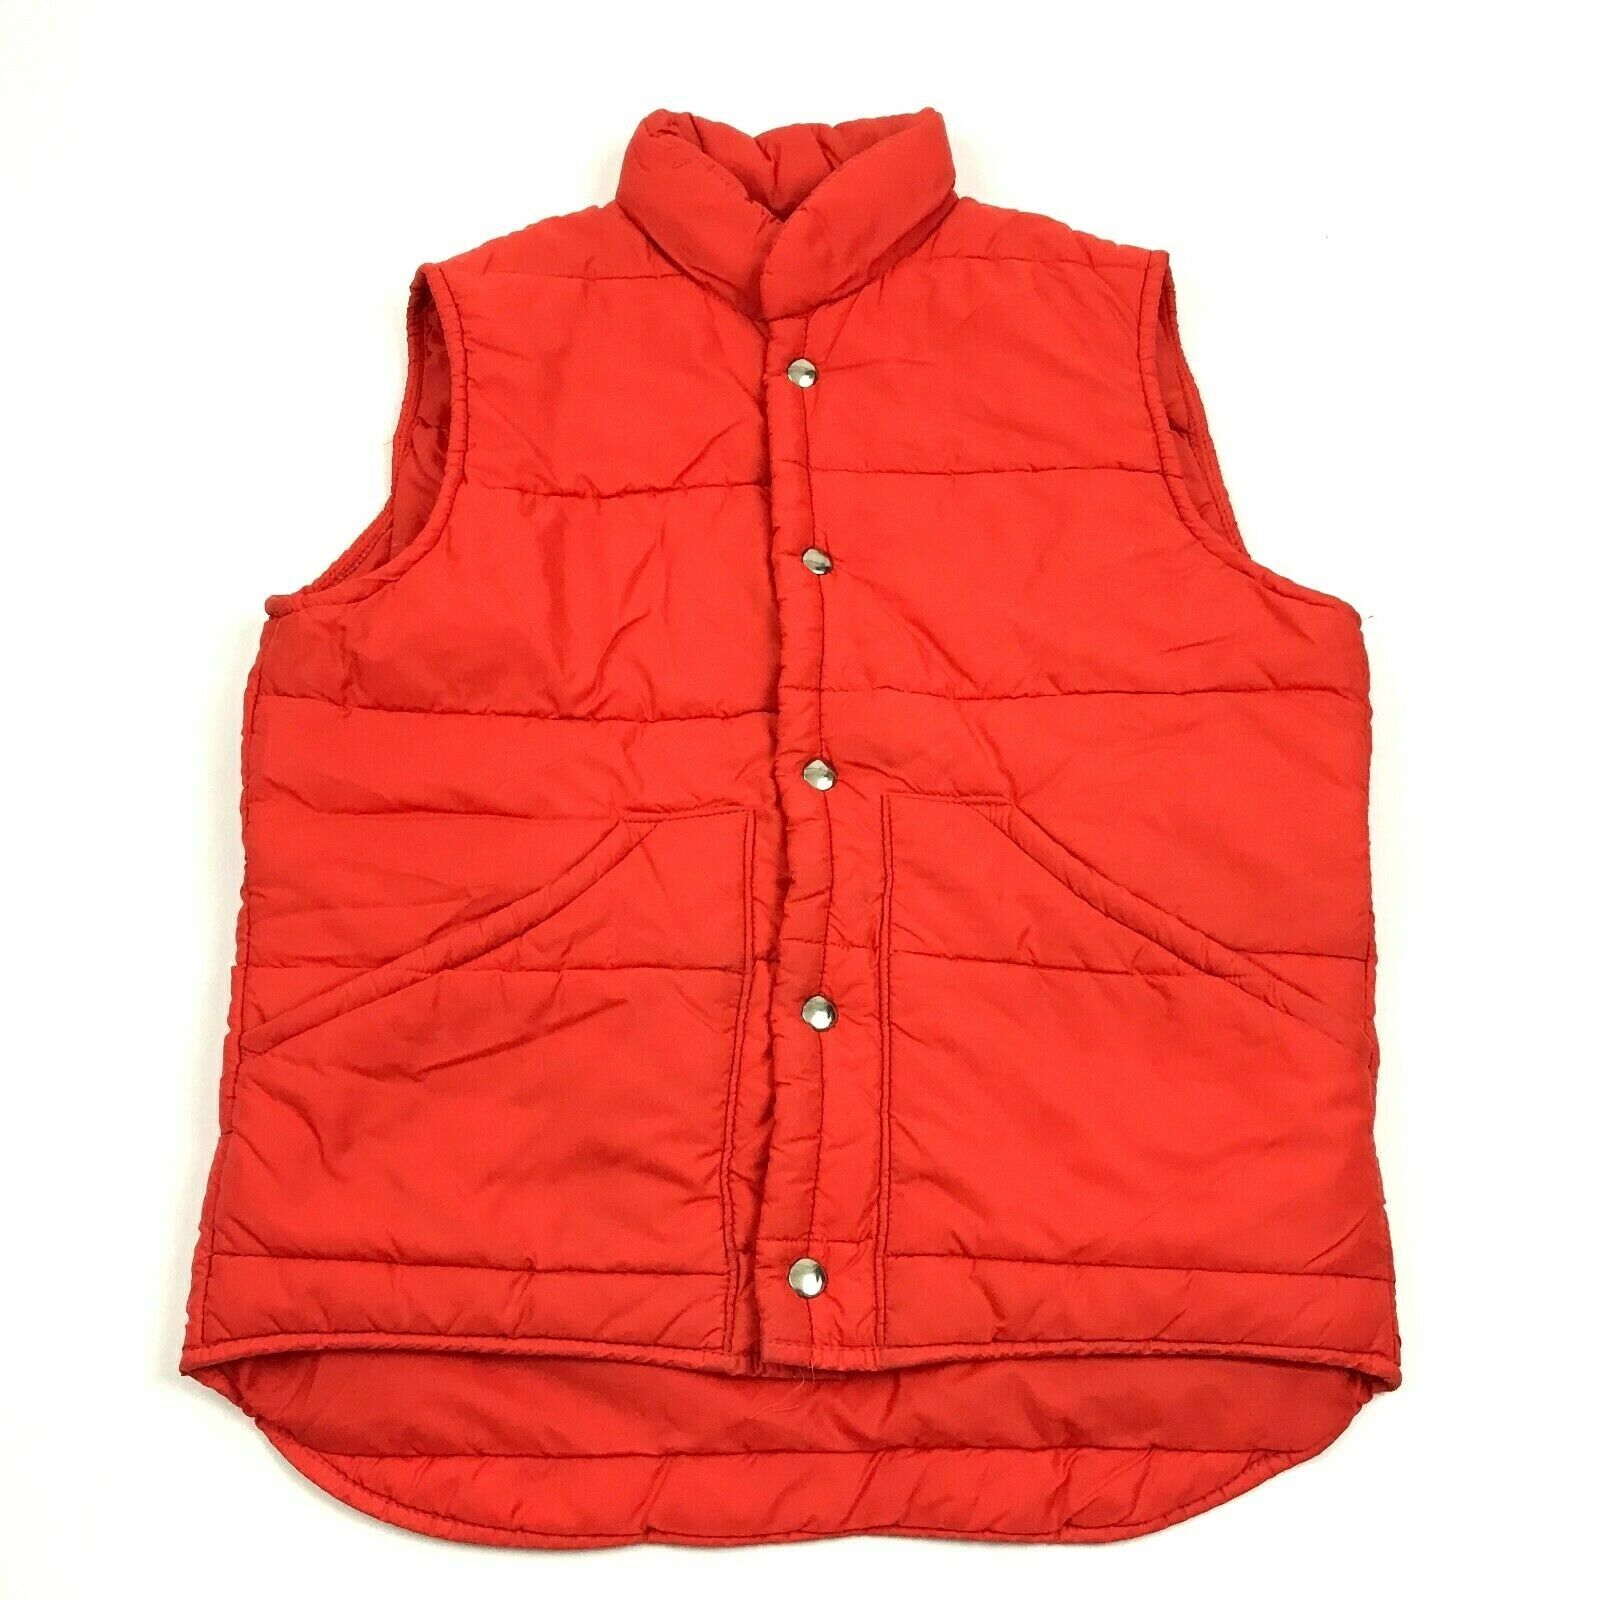 VINTAGE Orange Puffer Jacket Vest Women's Size Small Gilet Insulated ...